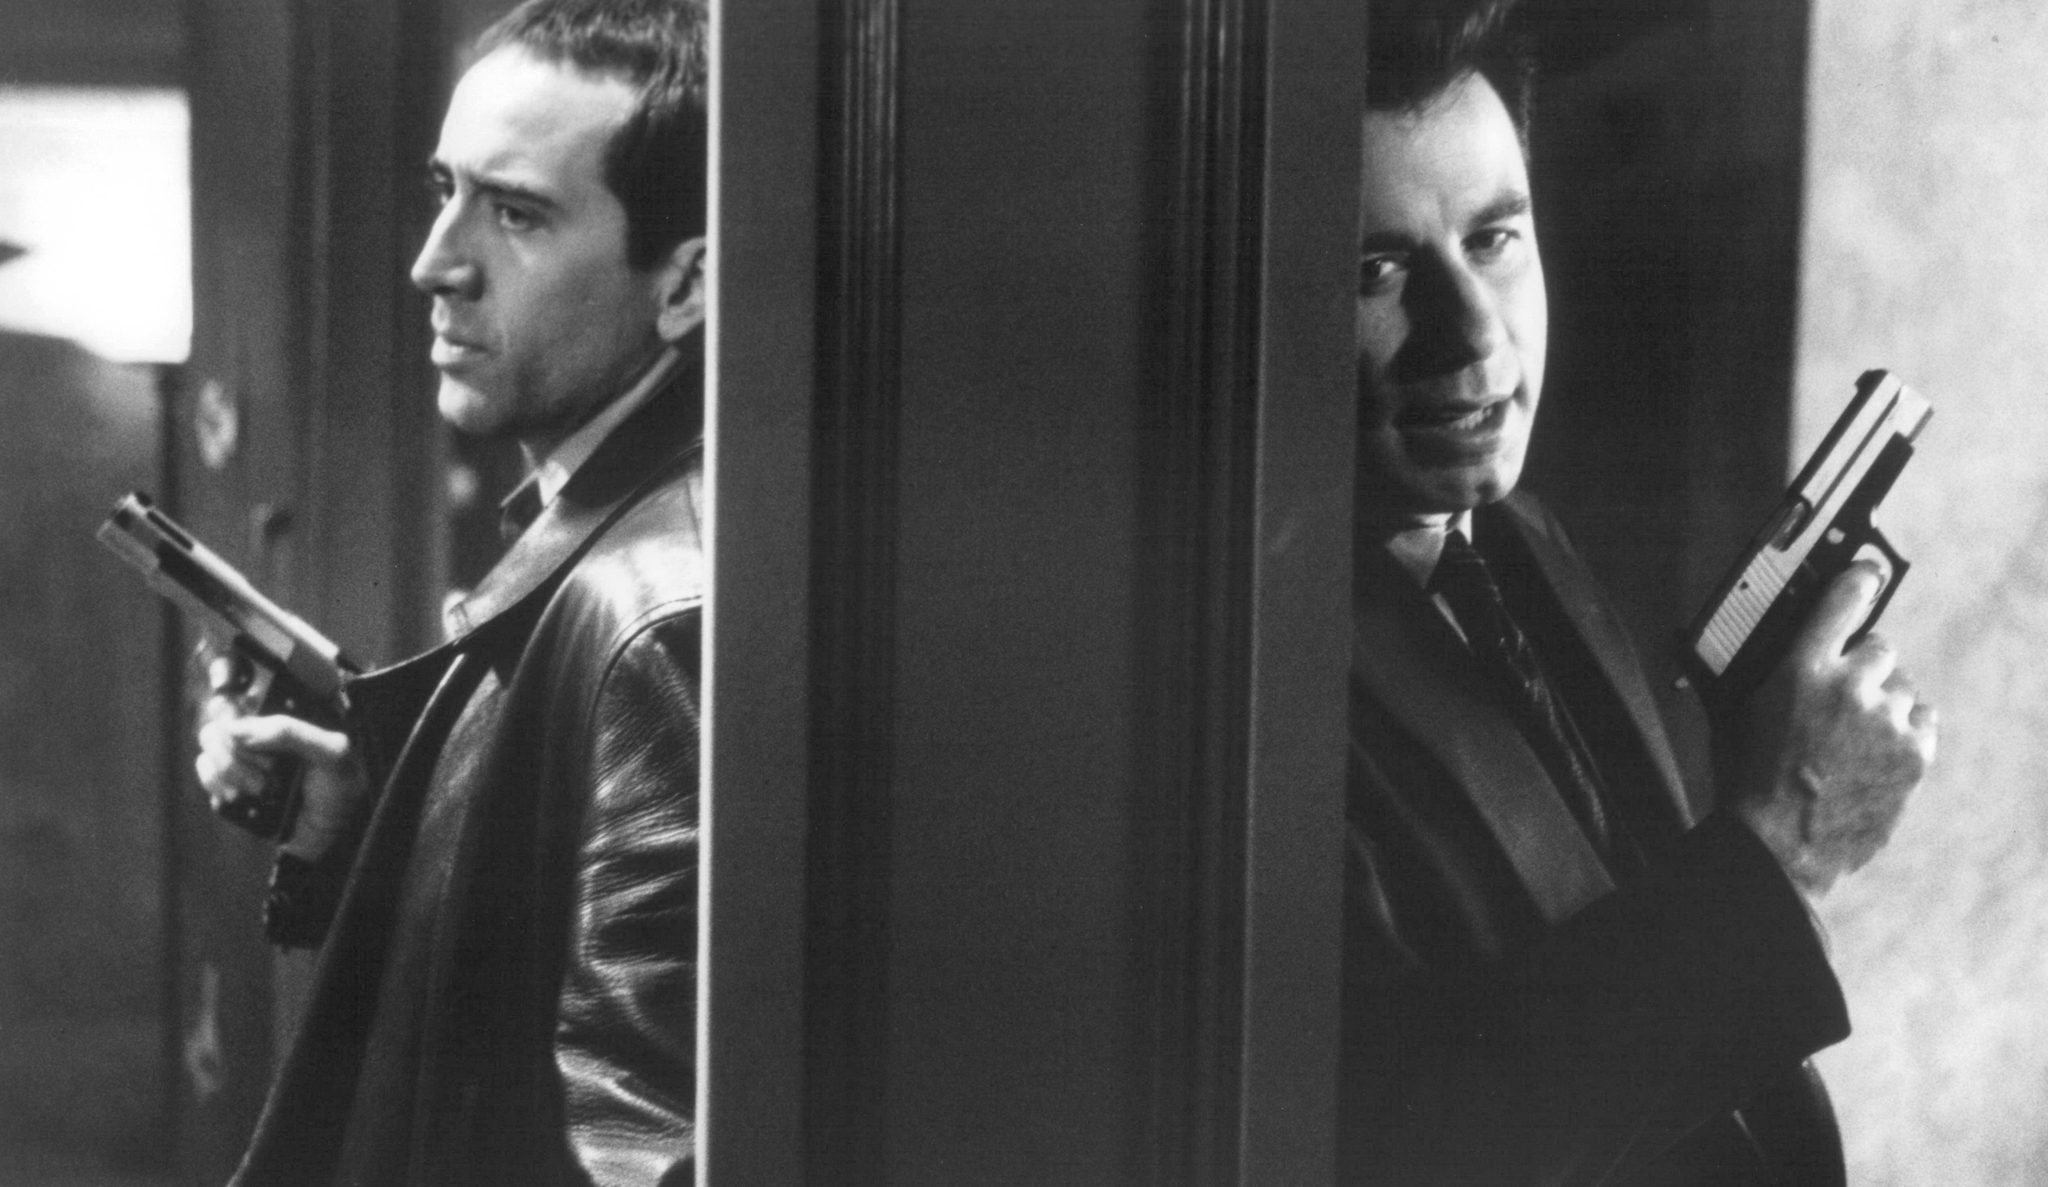 Still of Nicolas Cage and John Travolta in Face/Off (1997)